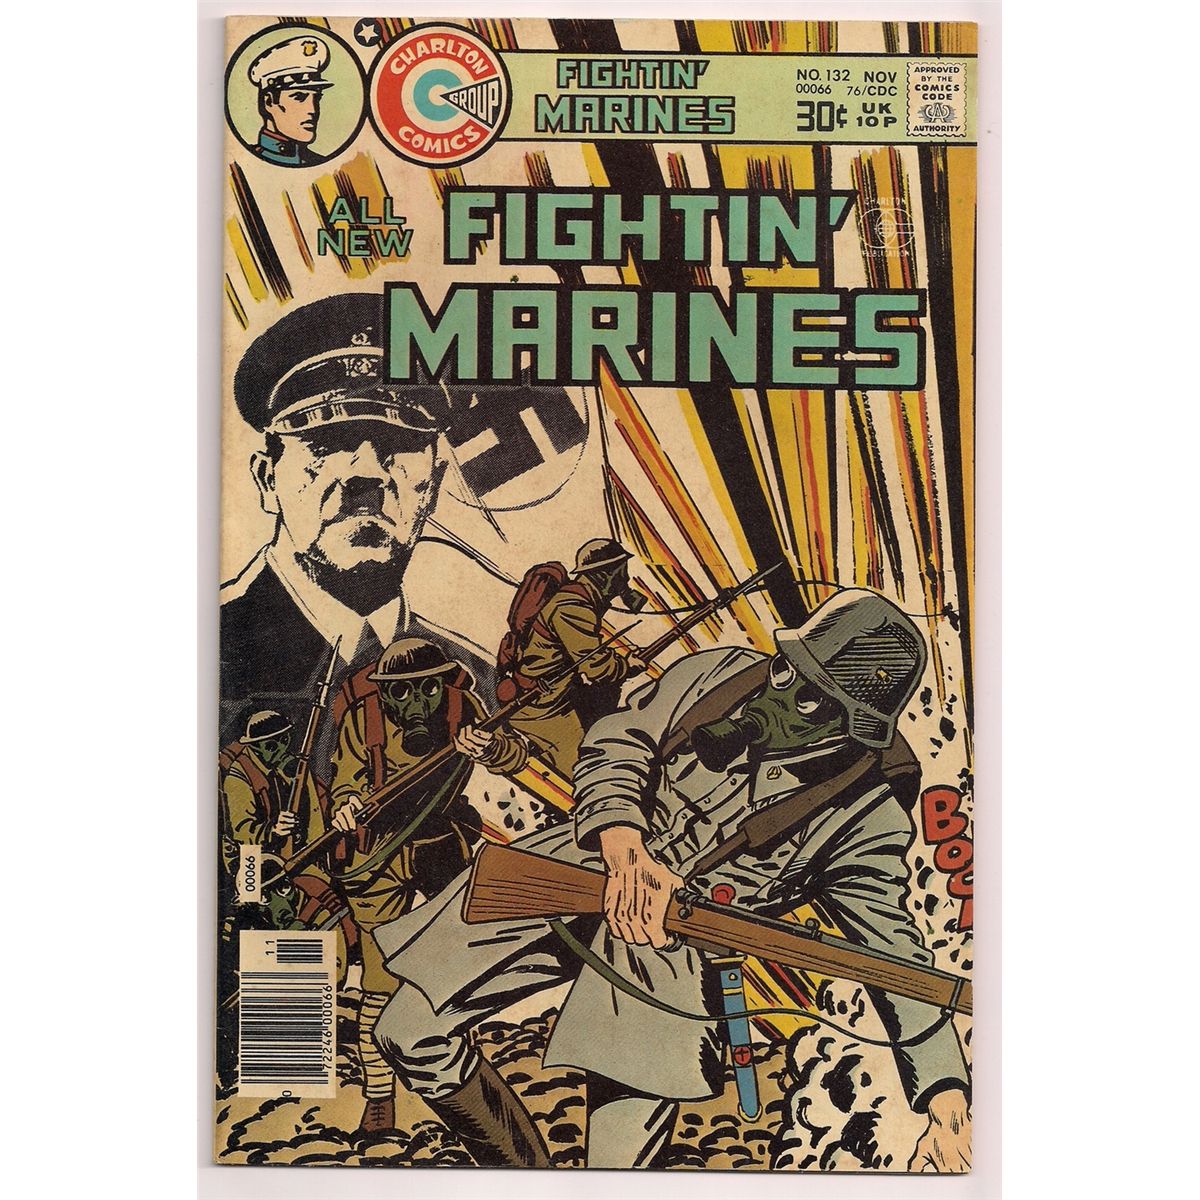 Military Comics #7